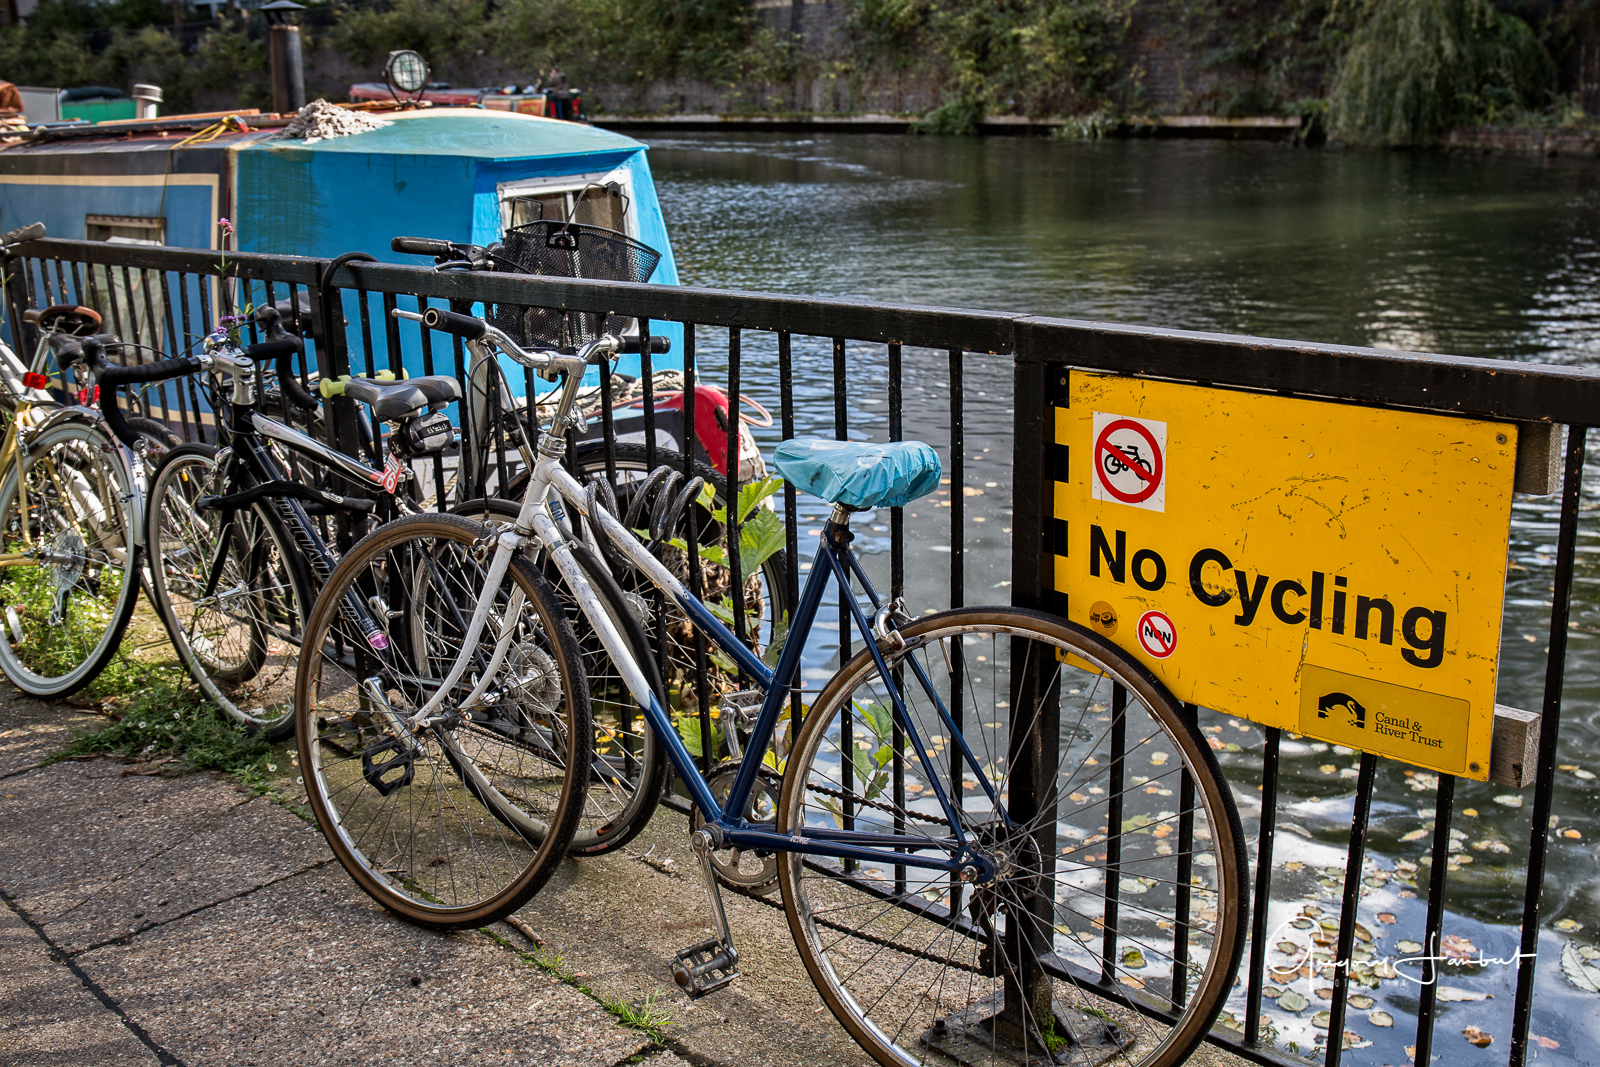 20161018_Camden_Regents-Canal_No-Cycling-towards-Camden